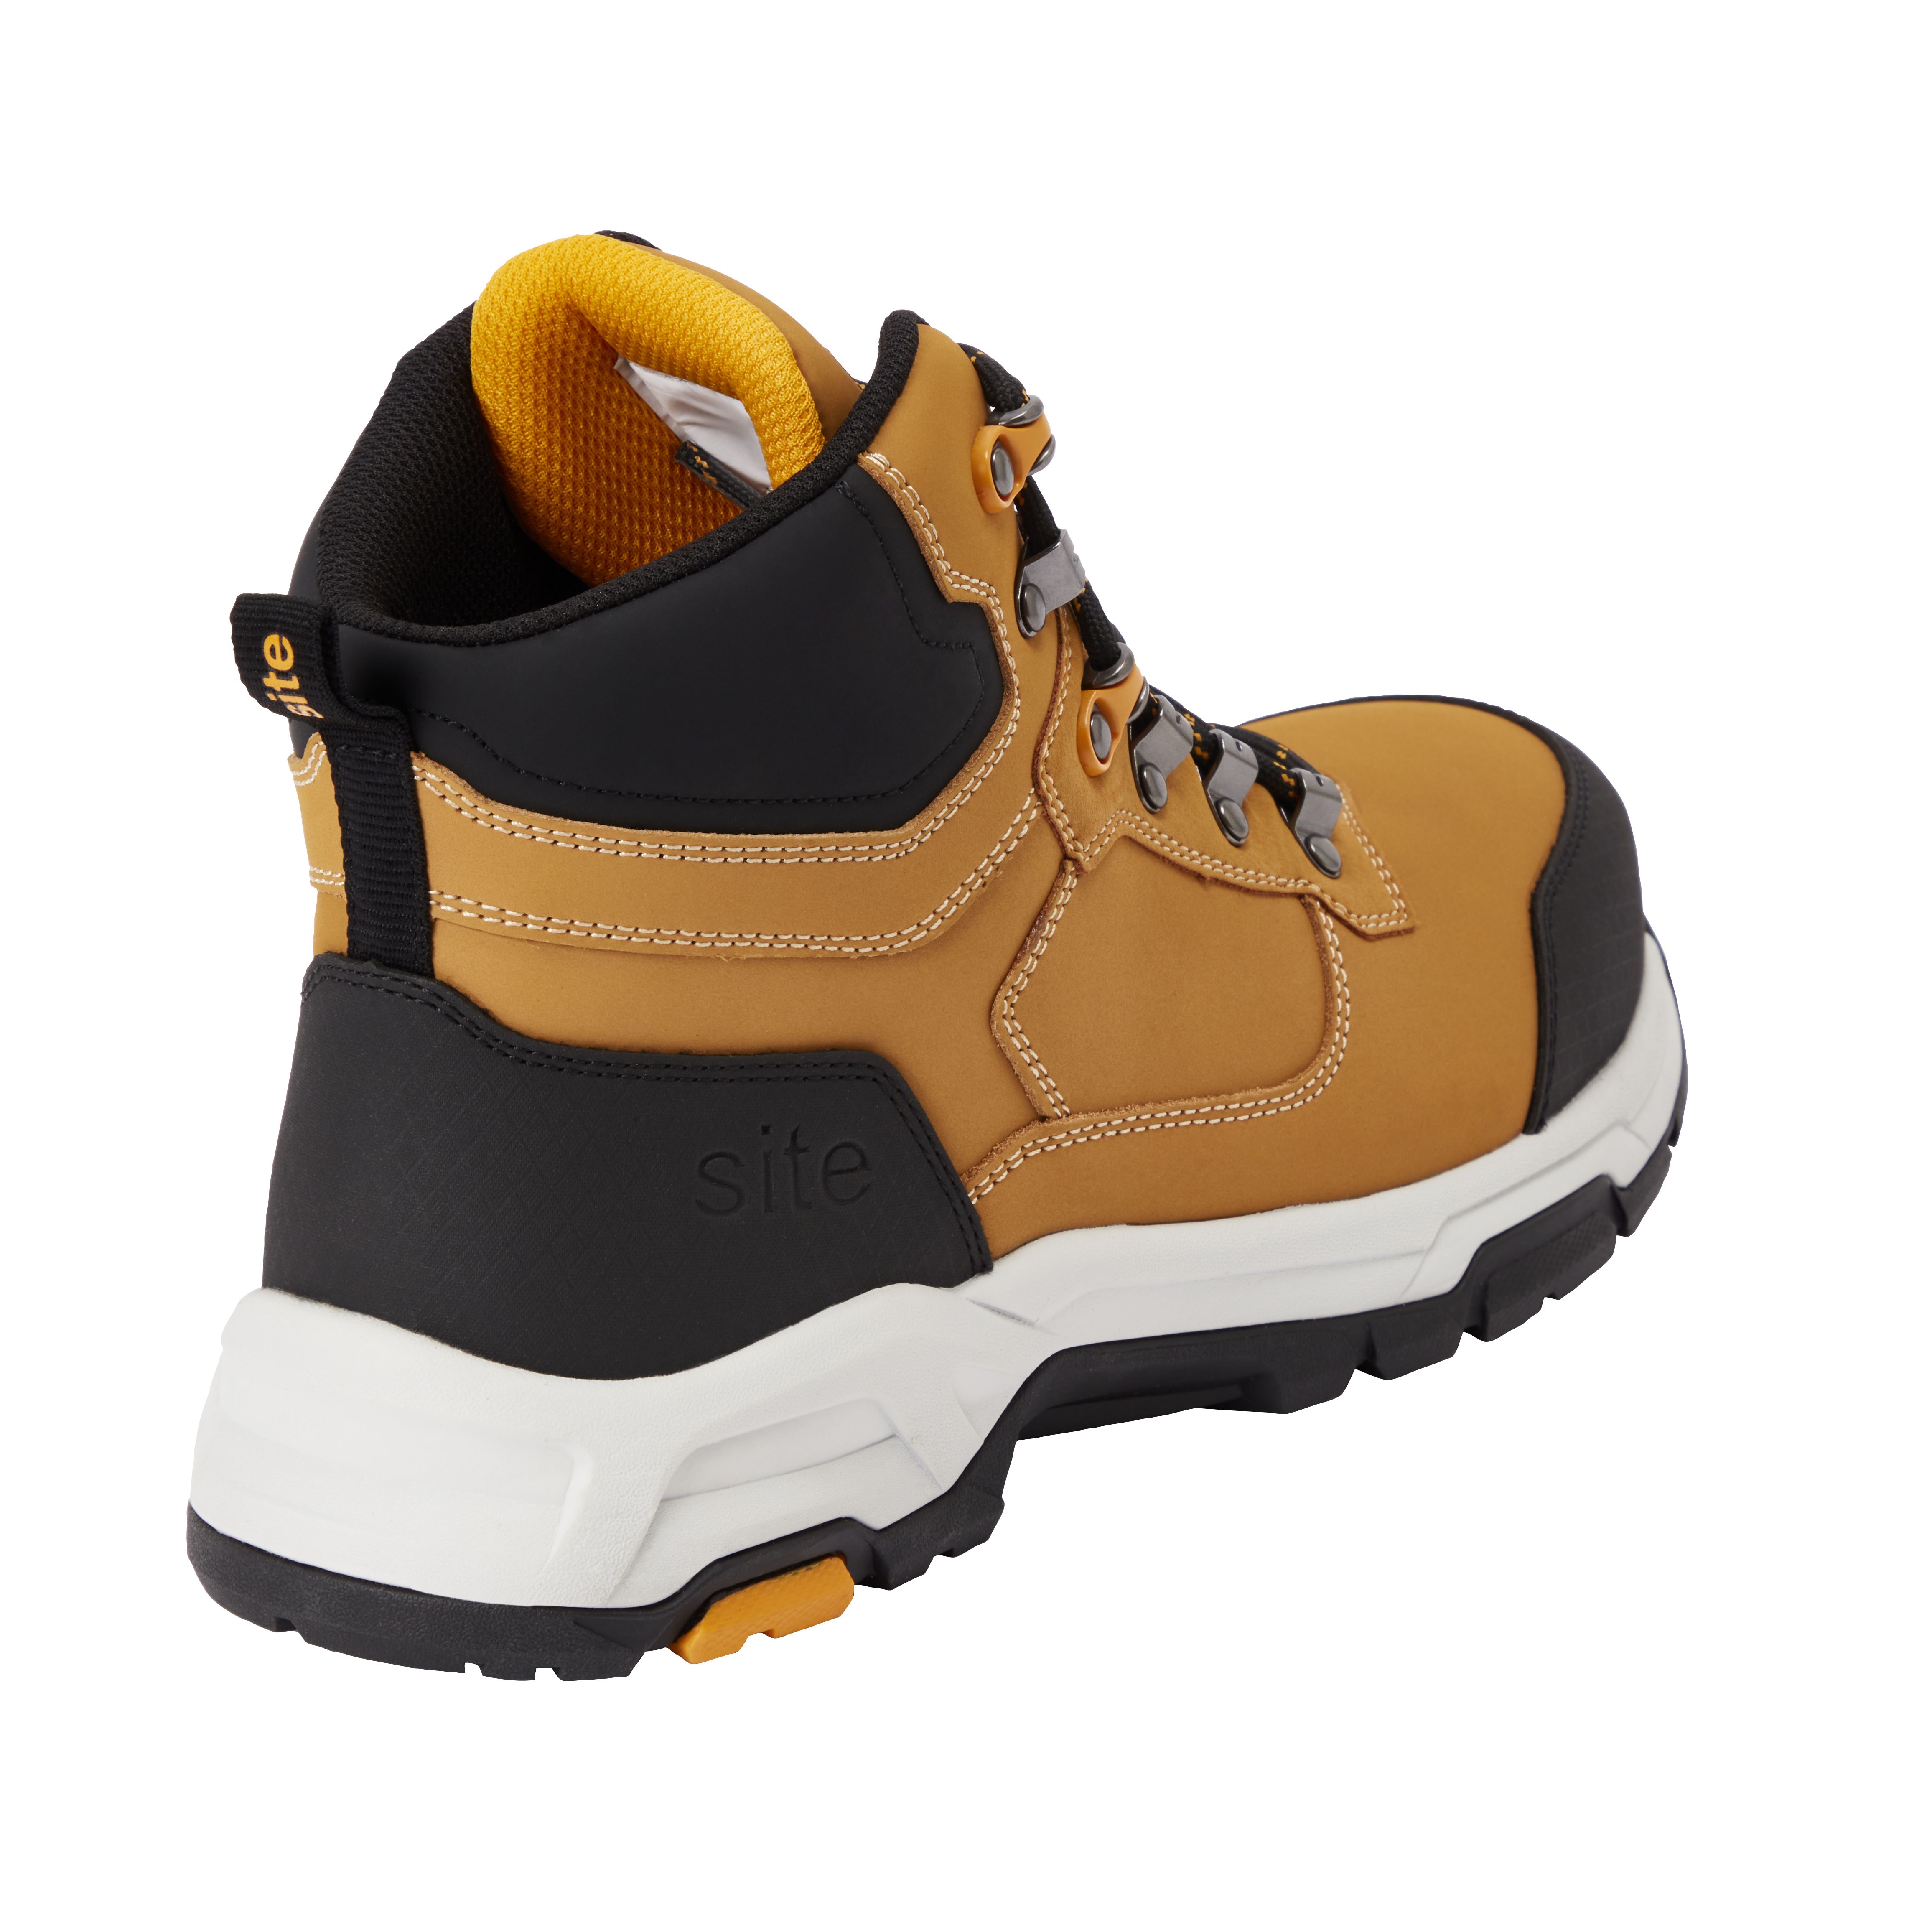 Site Stornes Men's Tan Safety boots, Size 10